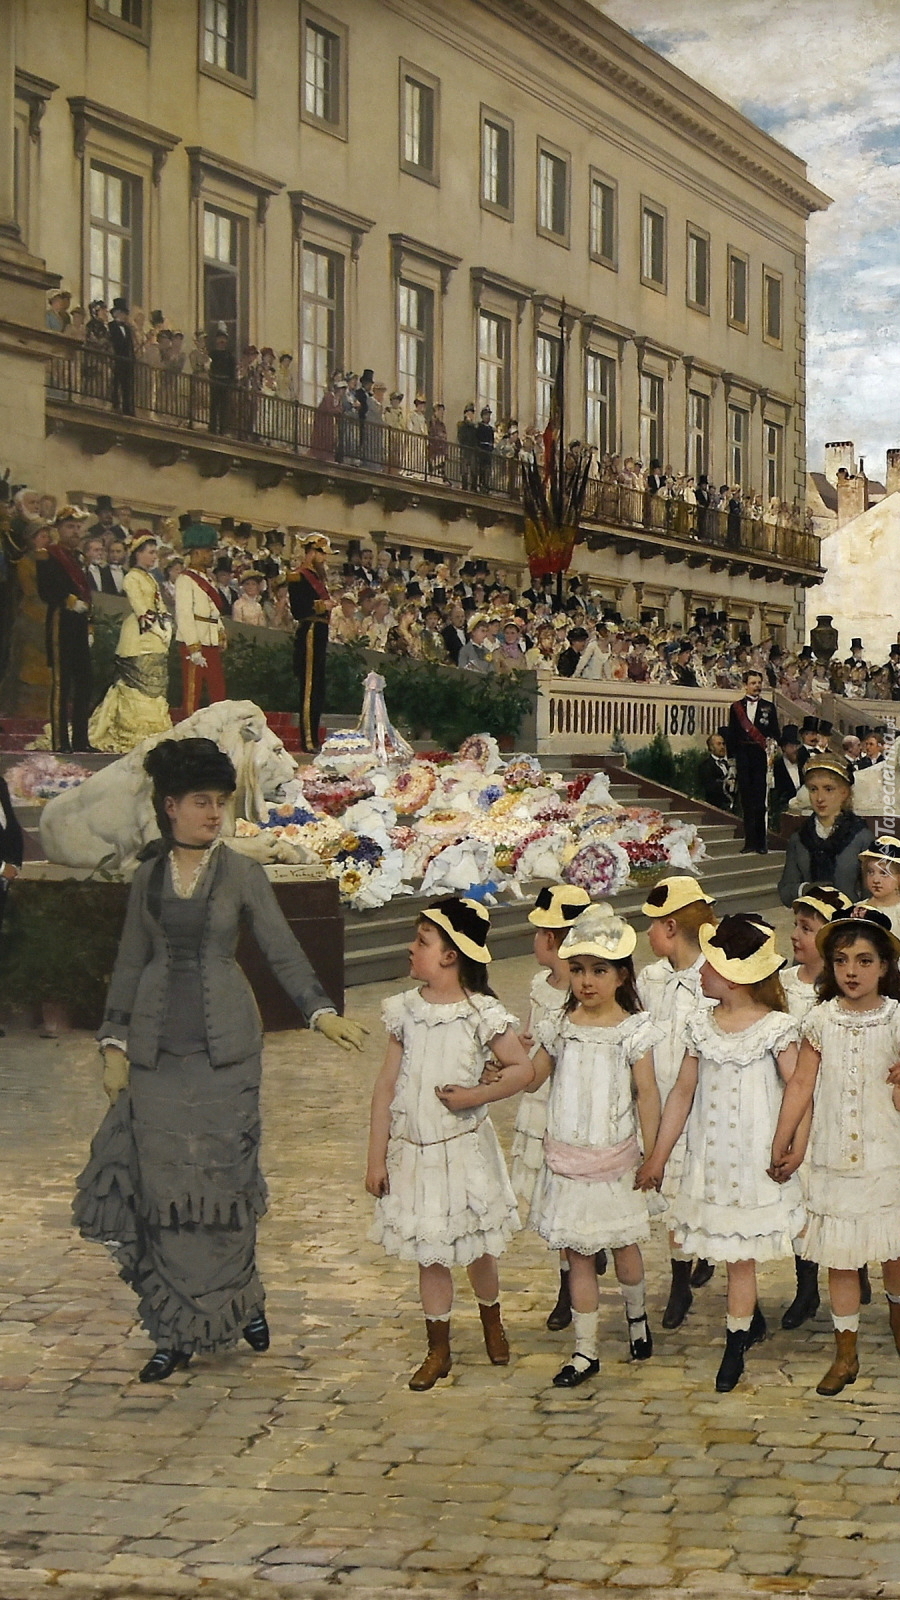 Parada dzieci na obrazie Jana Verhasa